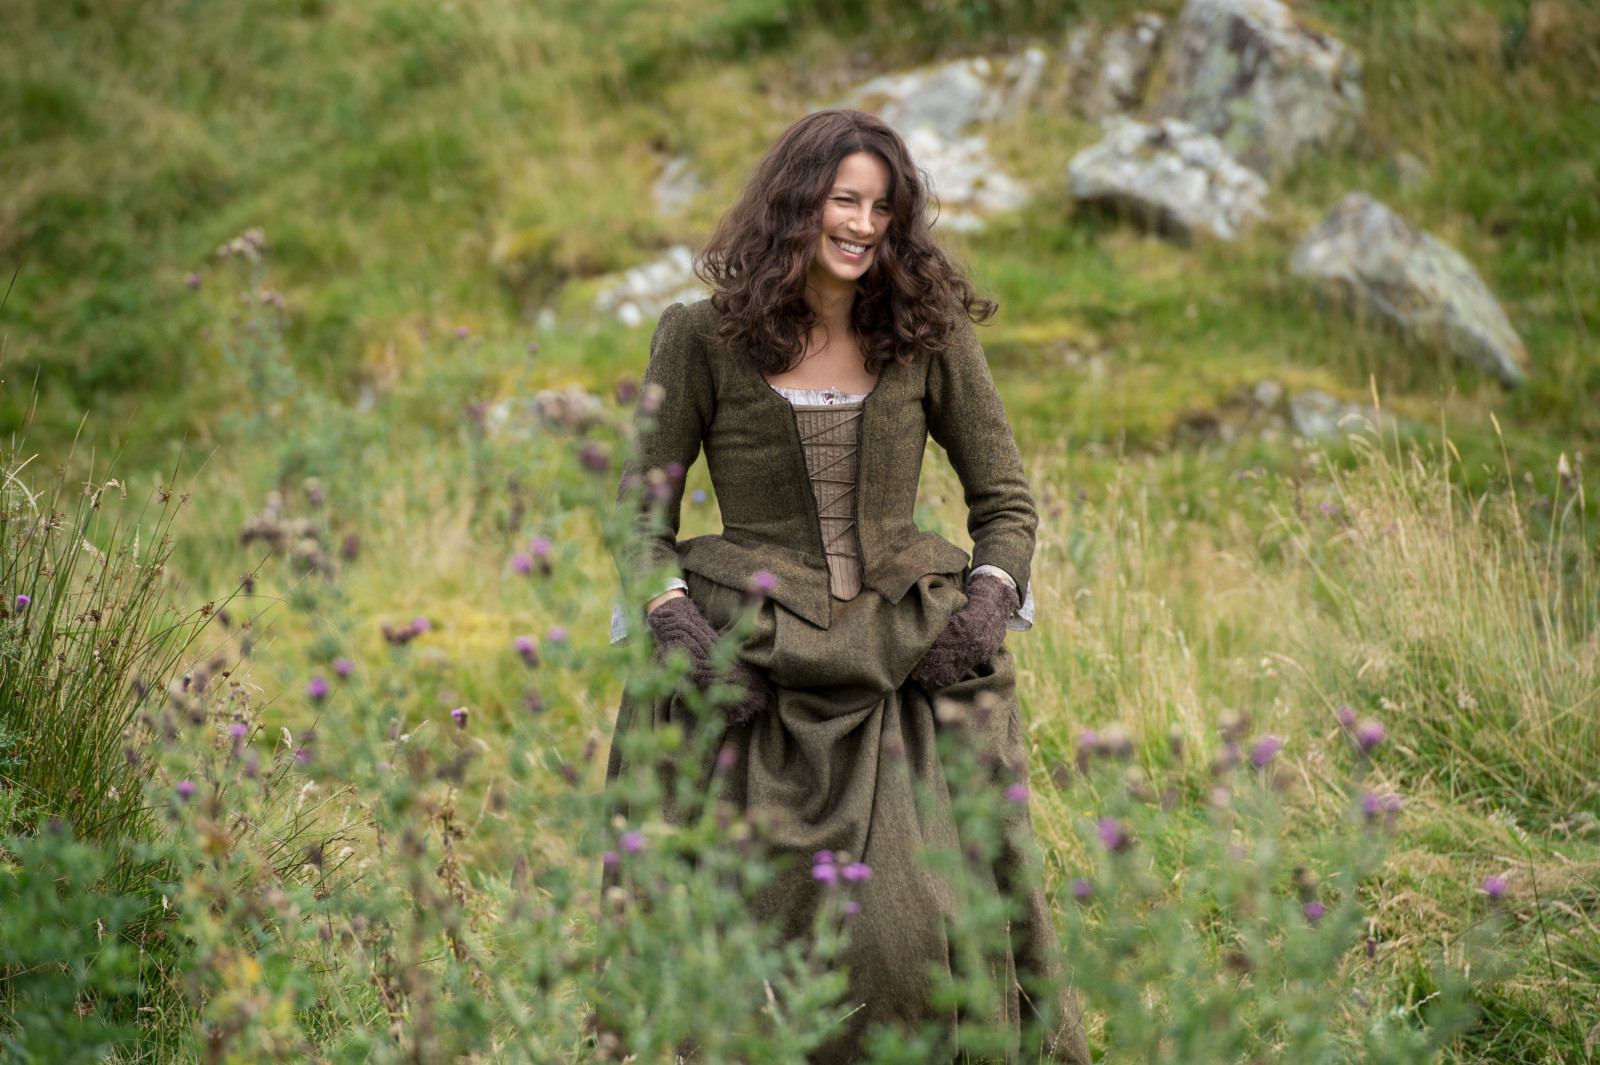 Photo of Outlander "Through a Glass, Darkly" (2x01) promoti...